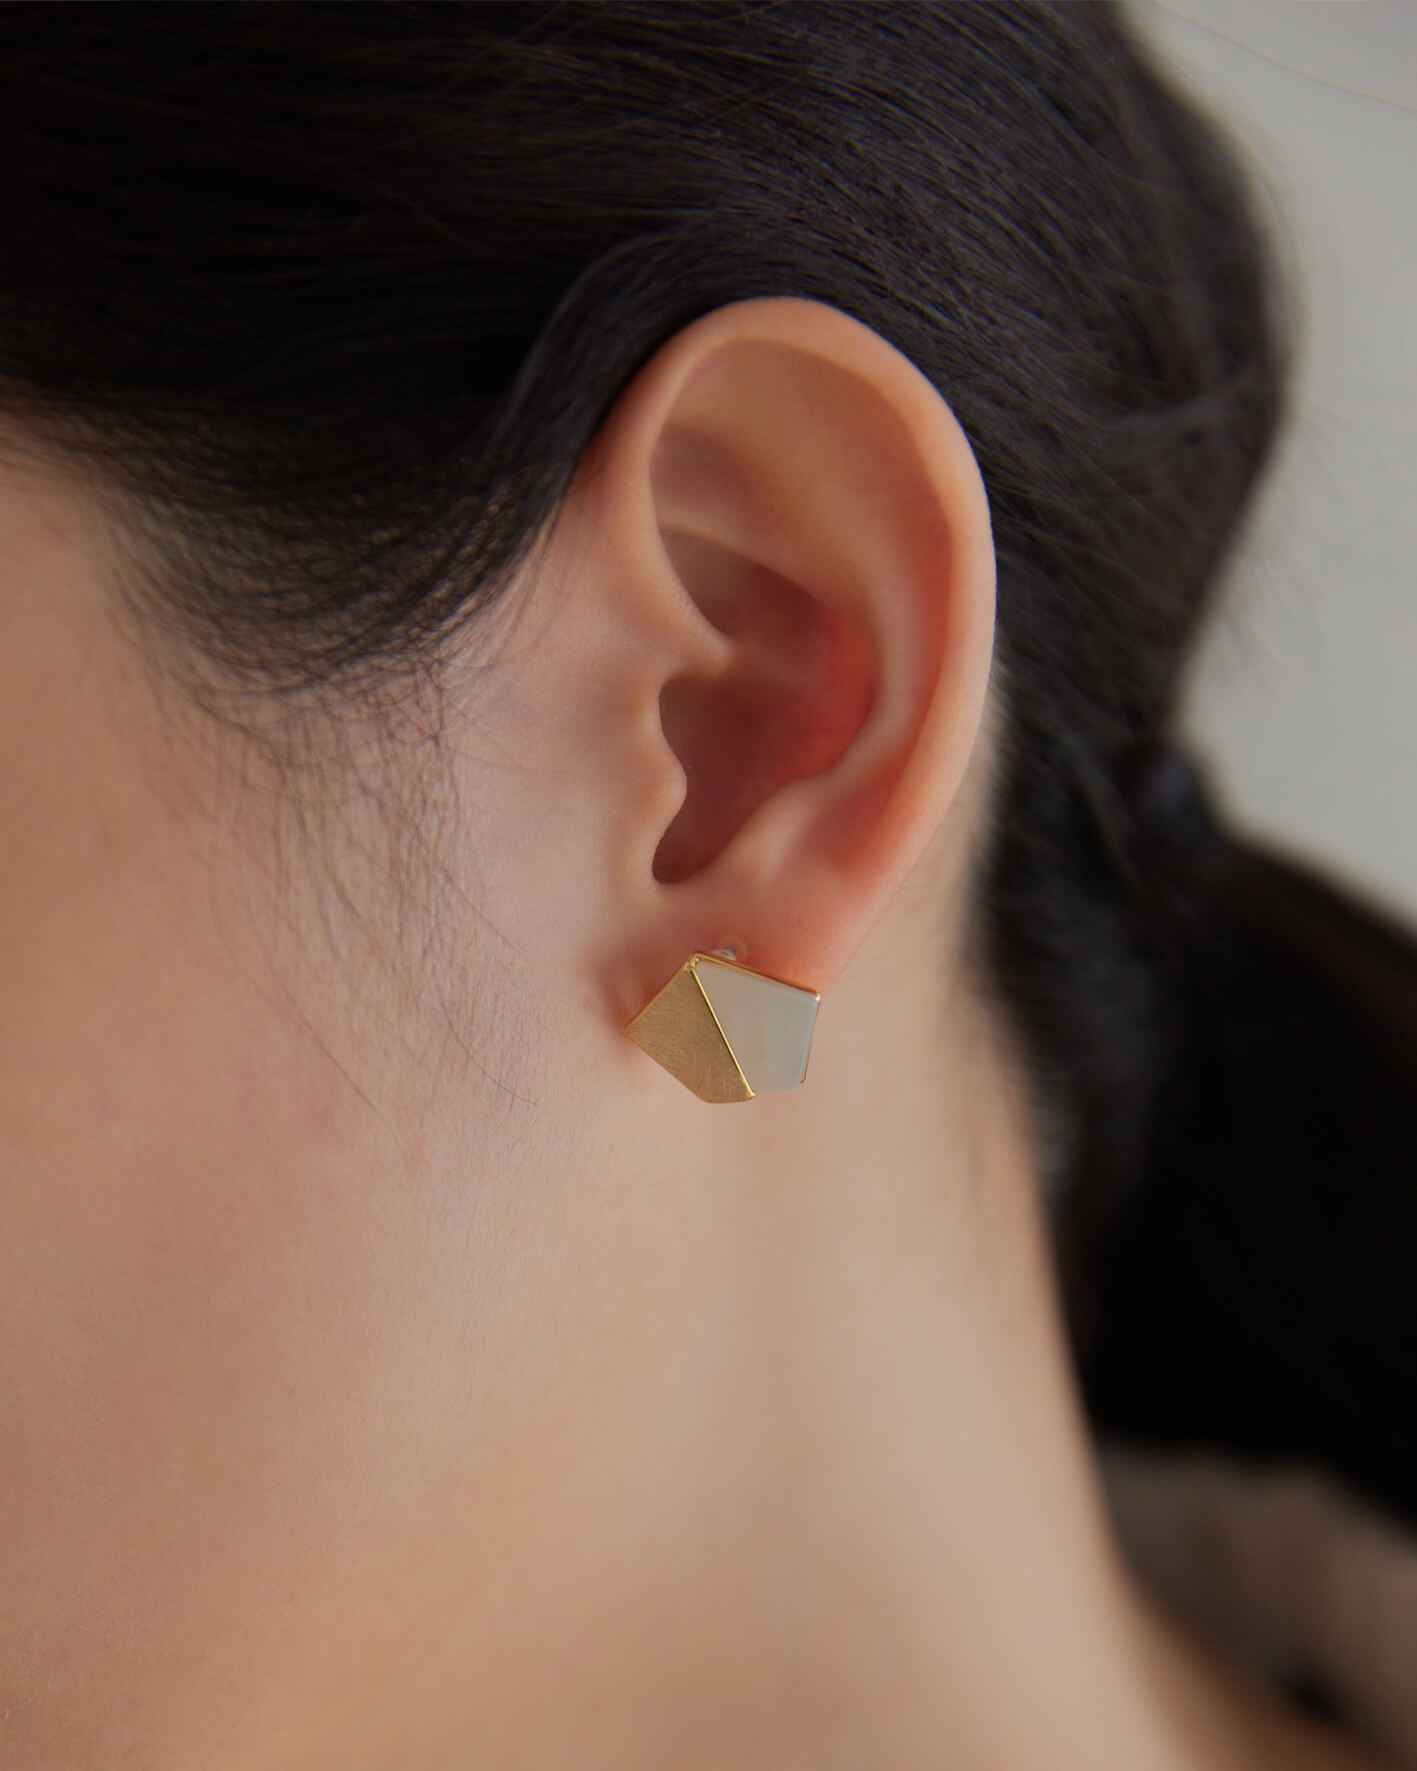 Eco安珂,韓國飾品,韓國耳環,耳針式耳環,矽膠夾耳環,透明耳夾耳環,無痛耳夾耳環,珠貝耳環,幾何耳環